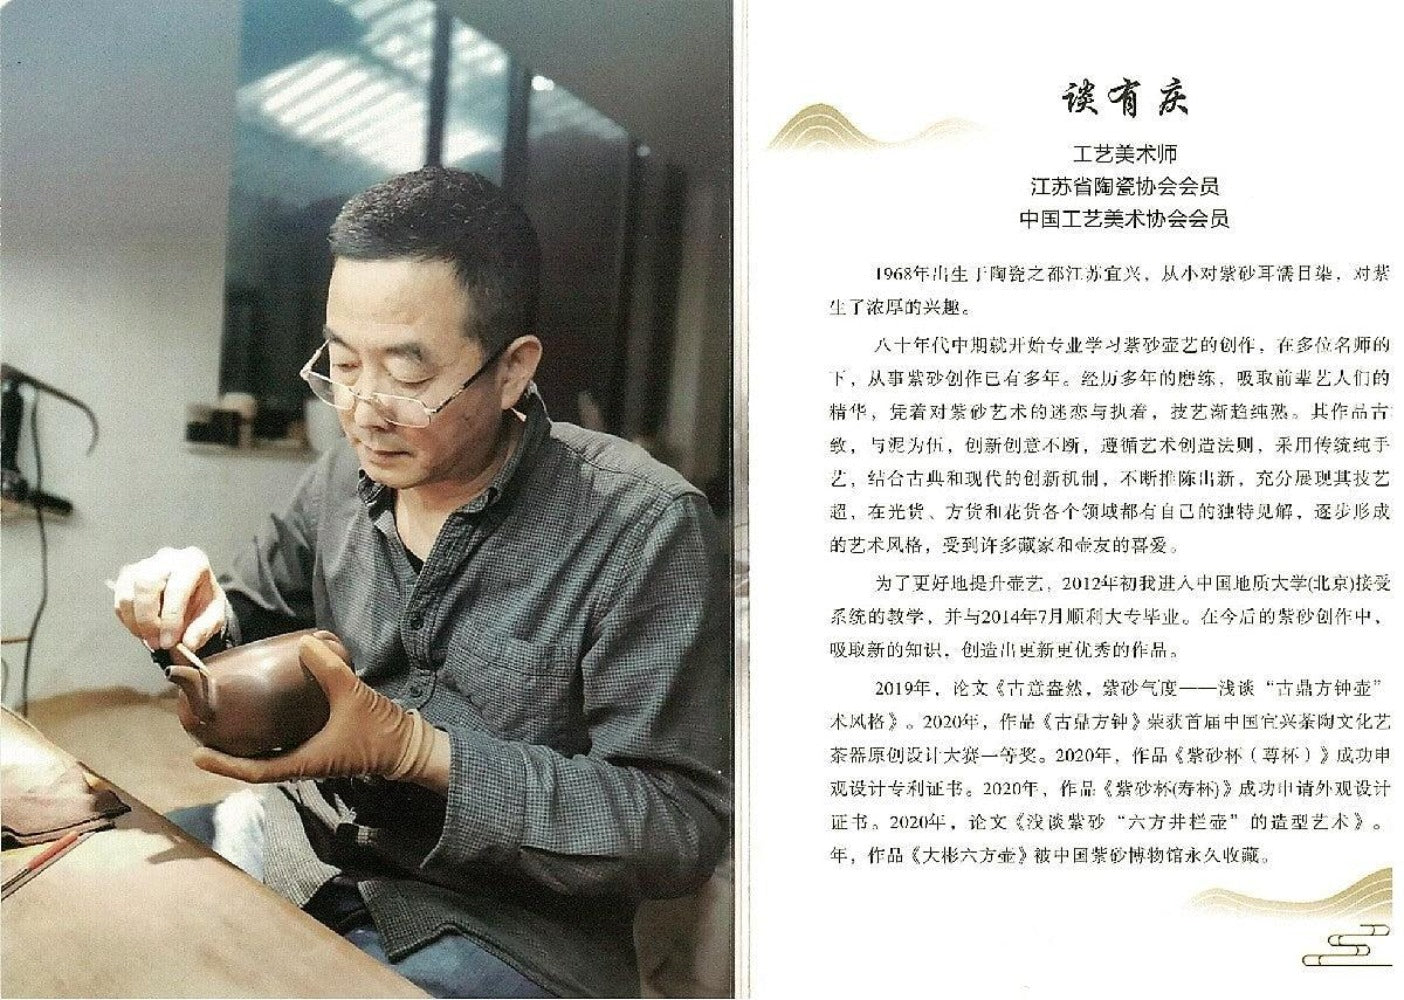 Full Handmade Yixing Zisha Teapot [Siting Pot] (Wucai Lao Duan Ni - 230ml)